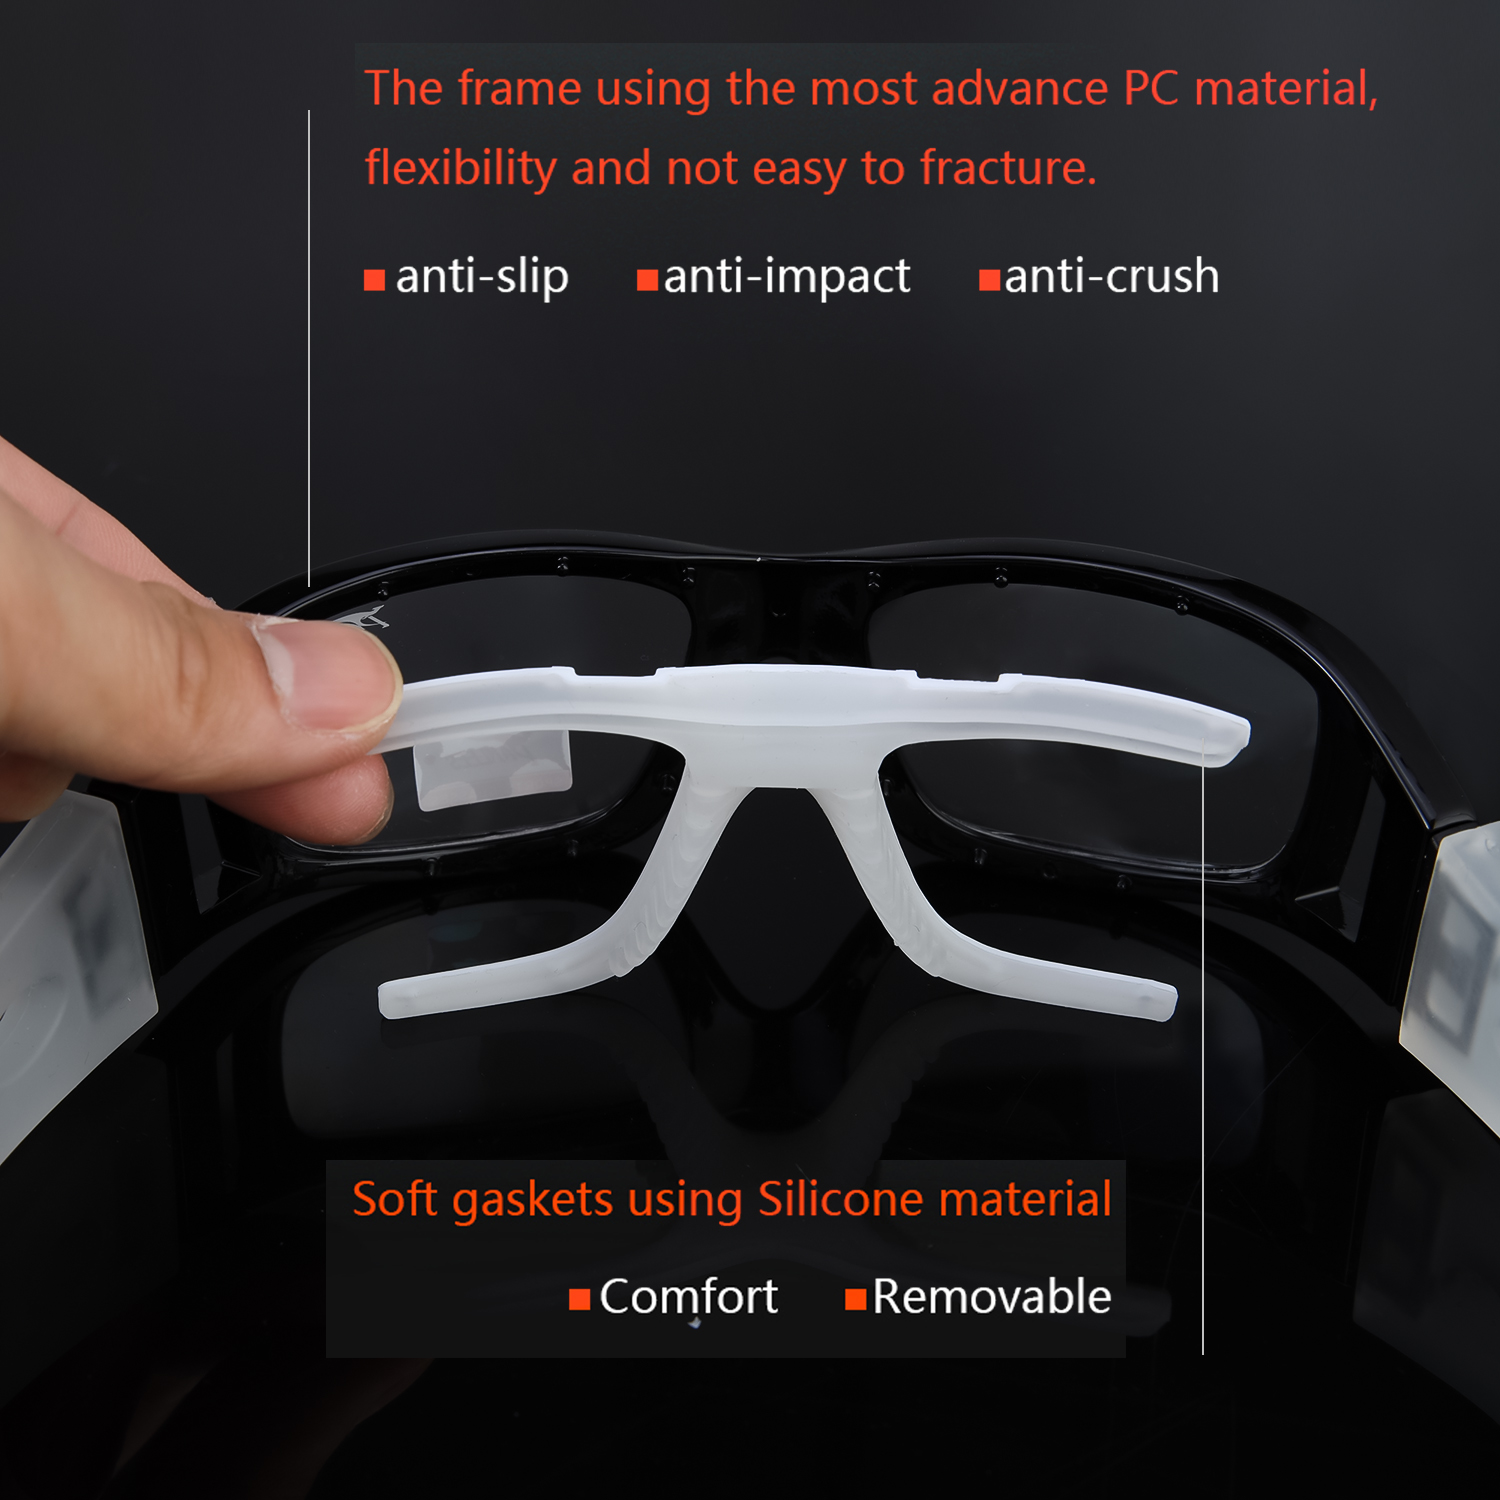 Sport Goggles for Football Cycling Sports Ski Safety Basketball Anti-fog Glasses Lens Adjustable Elastic Wrap Protective Eyewear